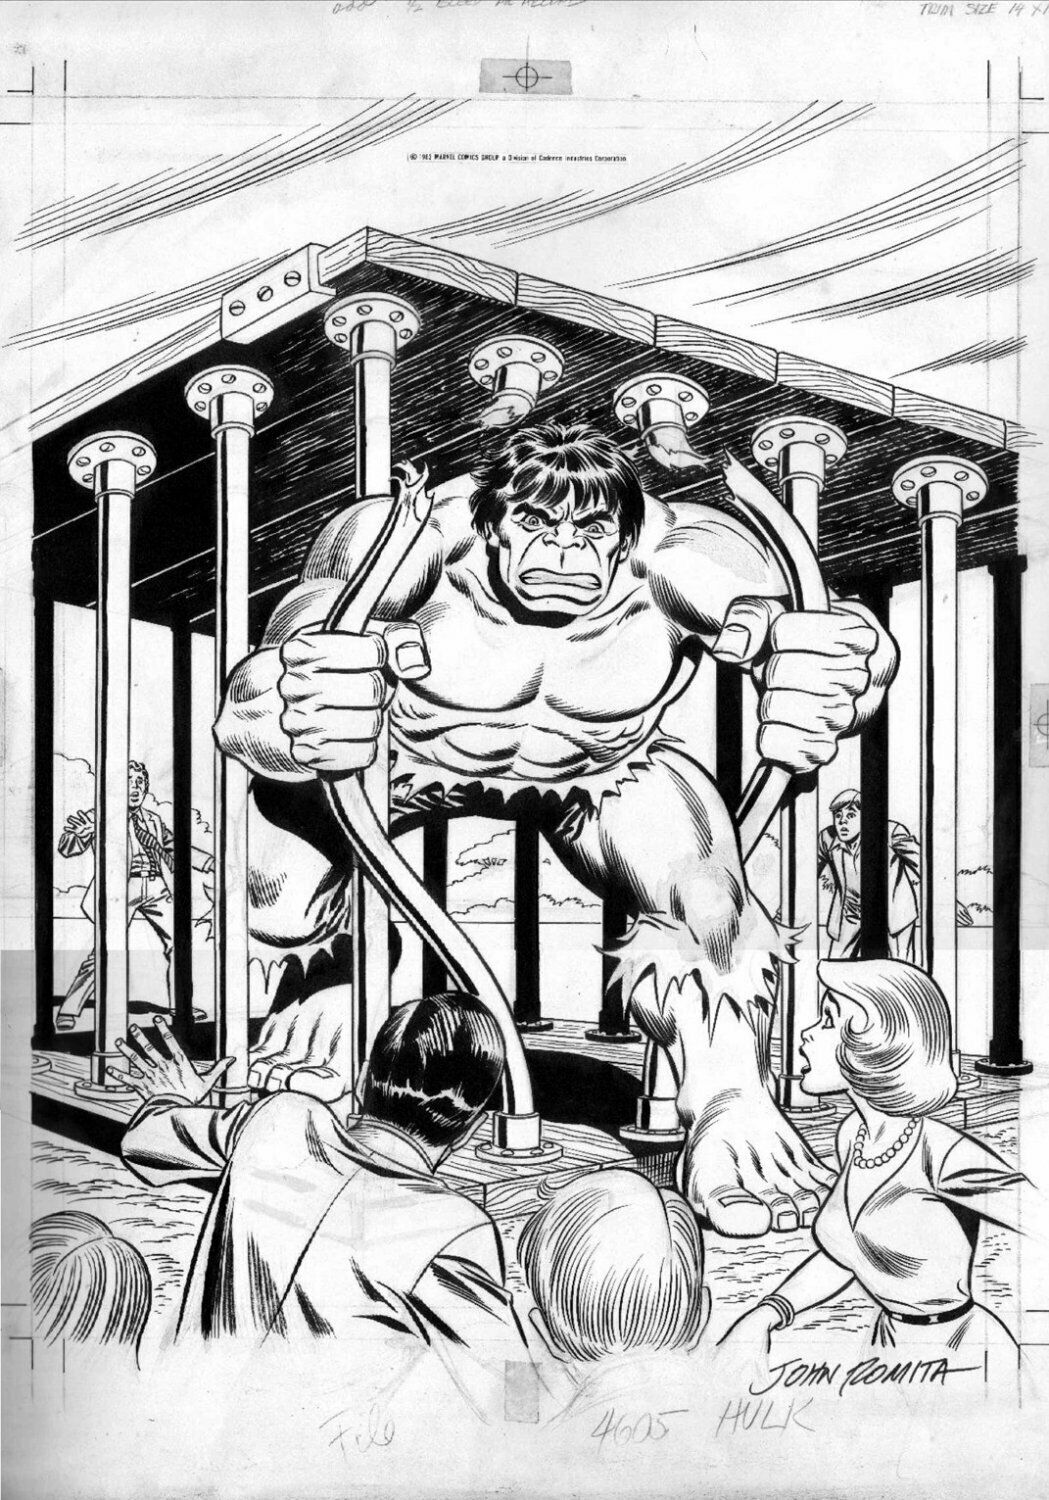 JOHN ROMITA SR signed - Hulk 3-up Puzzle Artwork, Hulk breaks free 1982